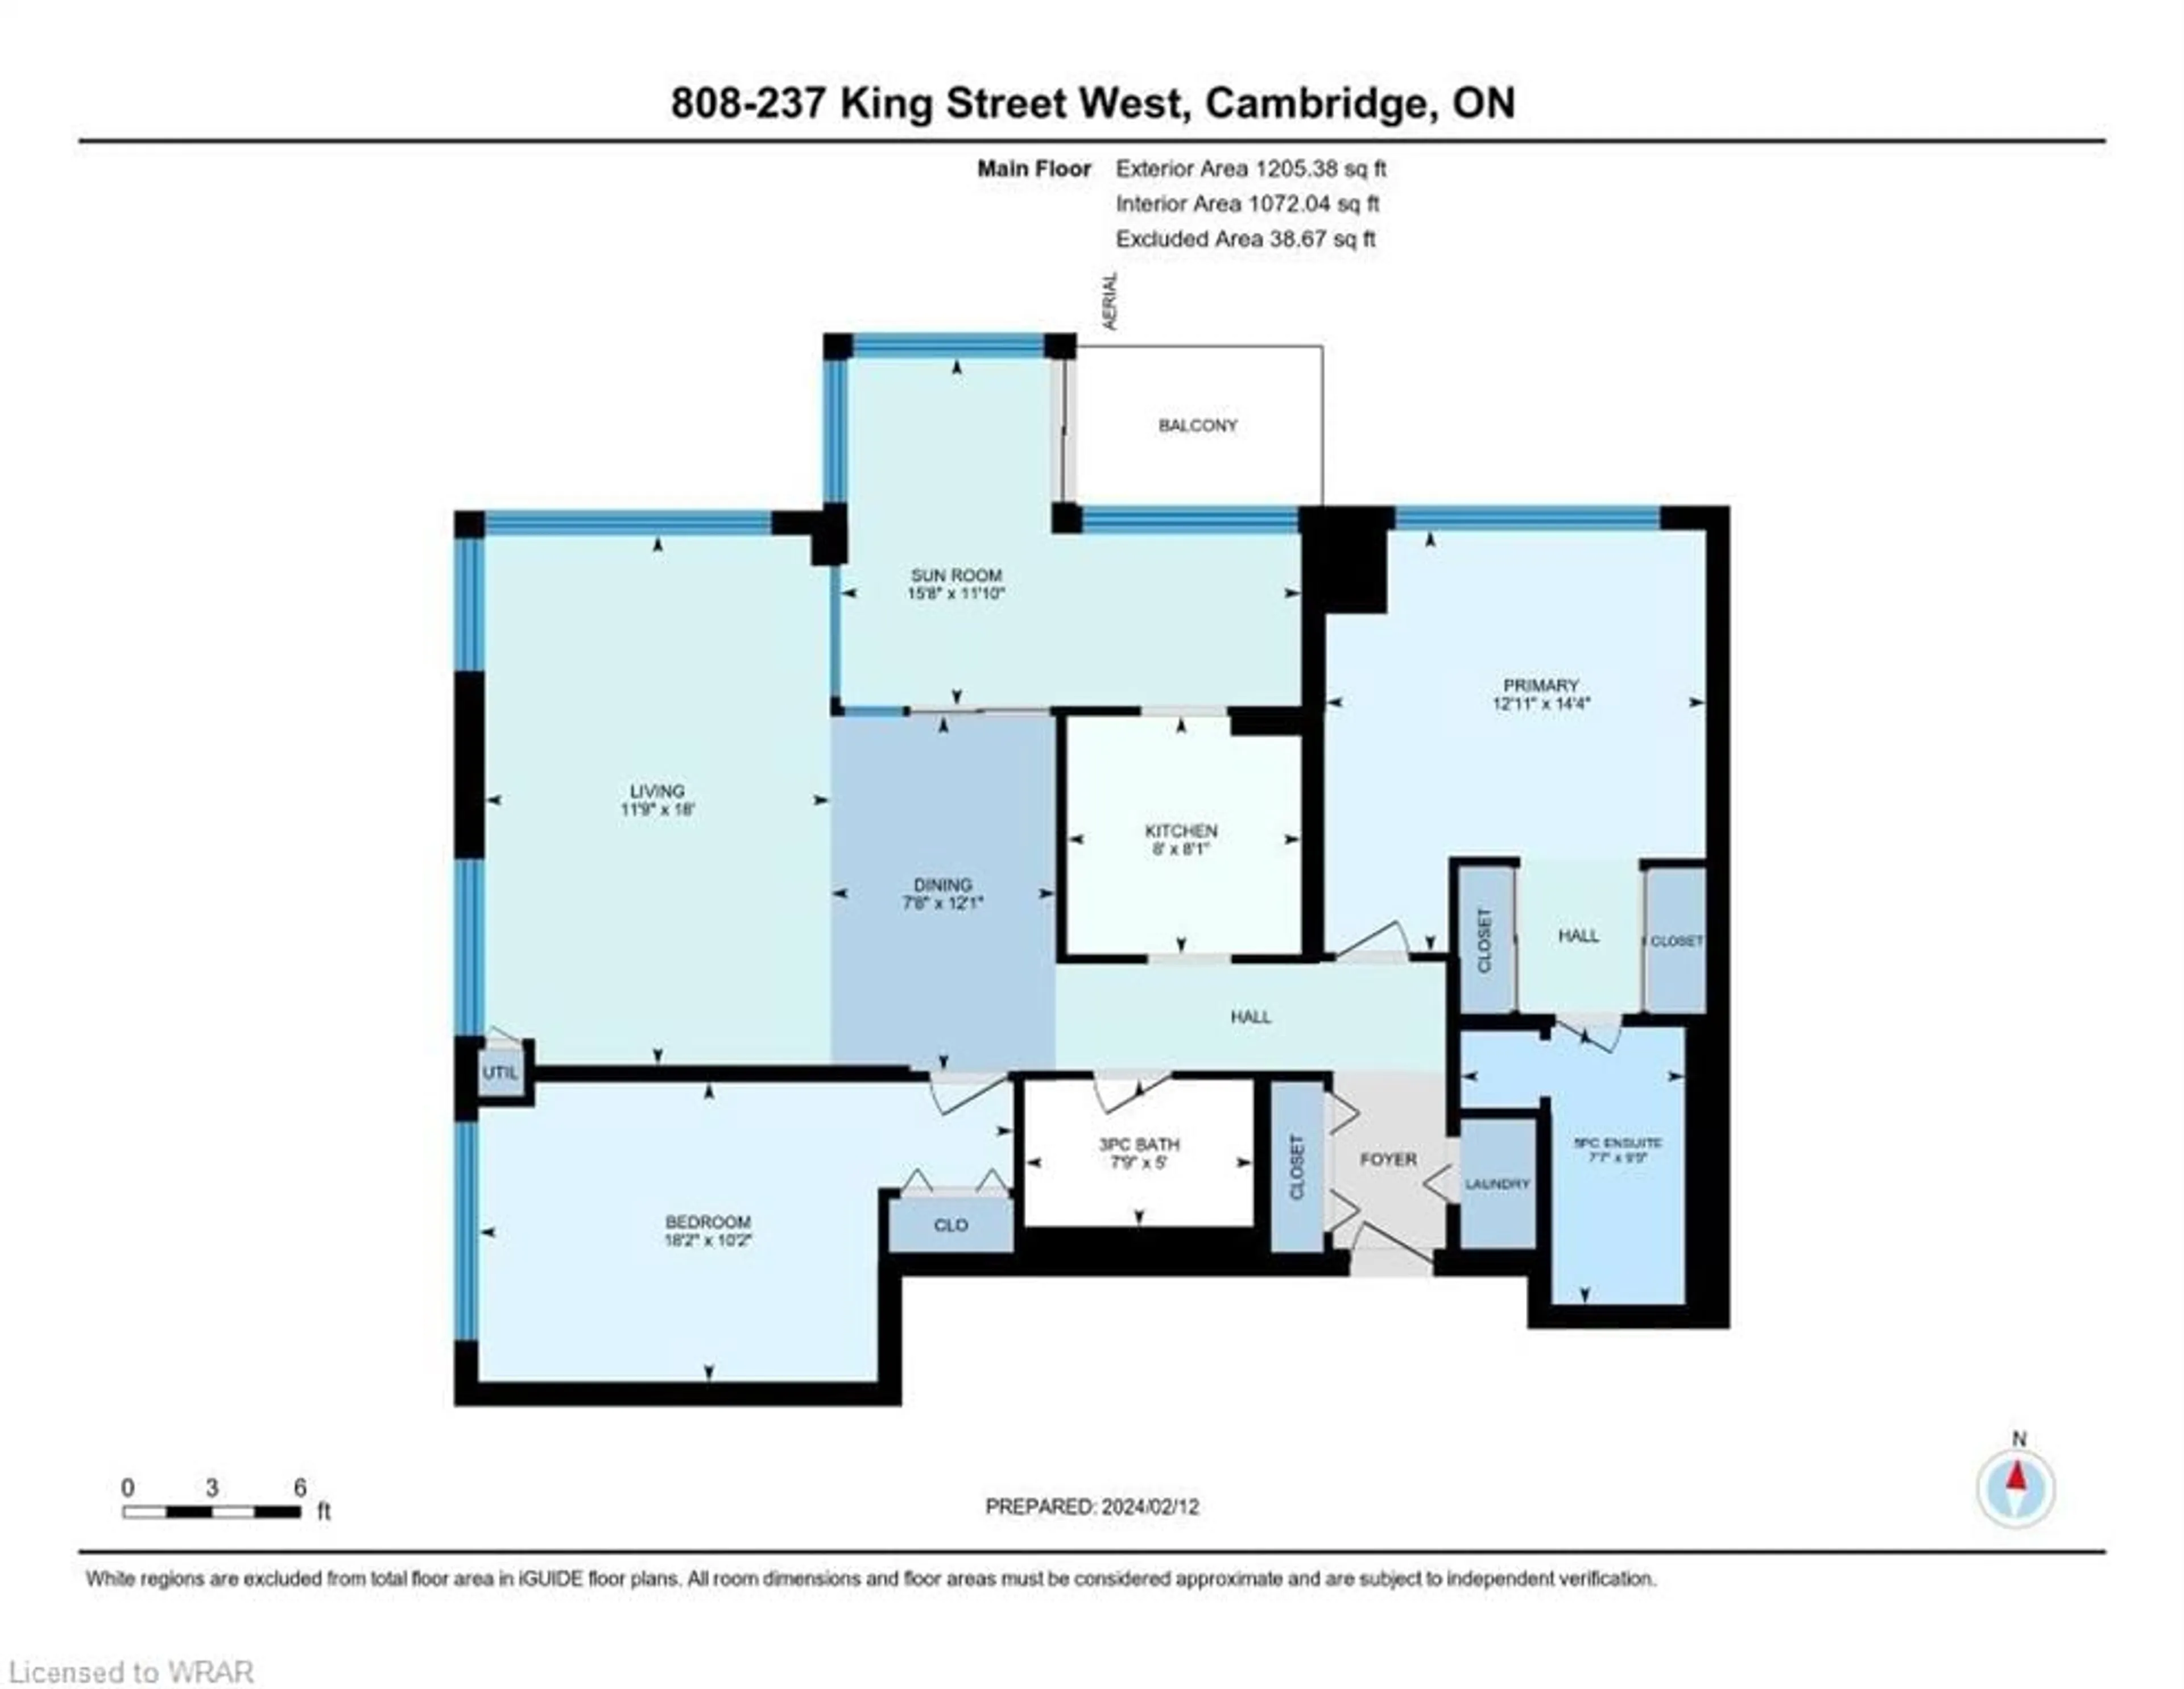 Floor plan for 237 King St #808, Cambridge Ontario N3H 5L2